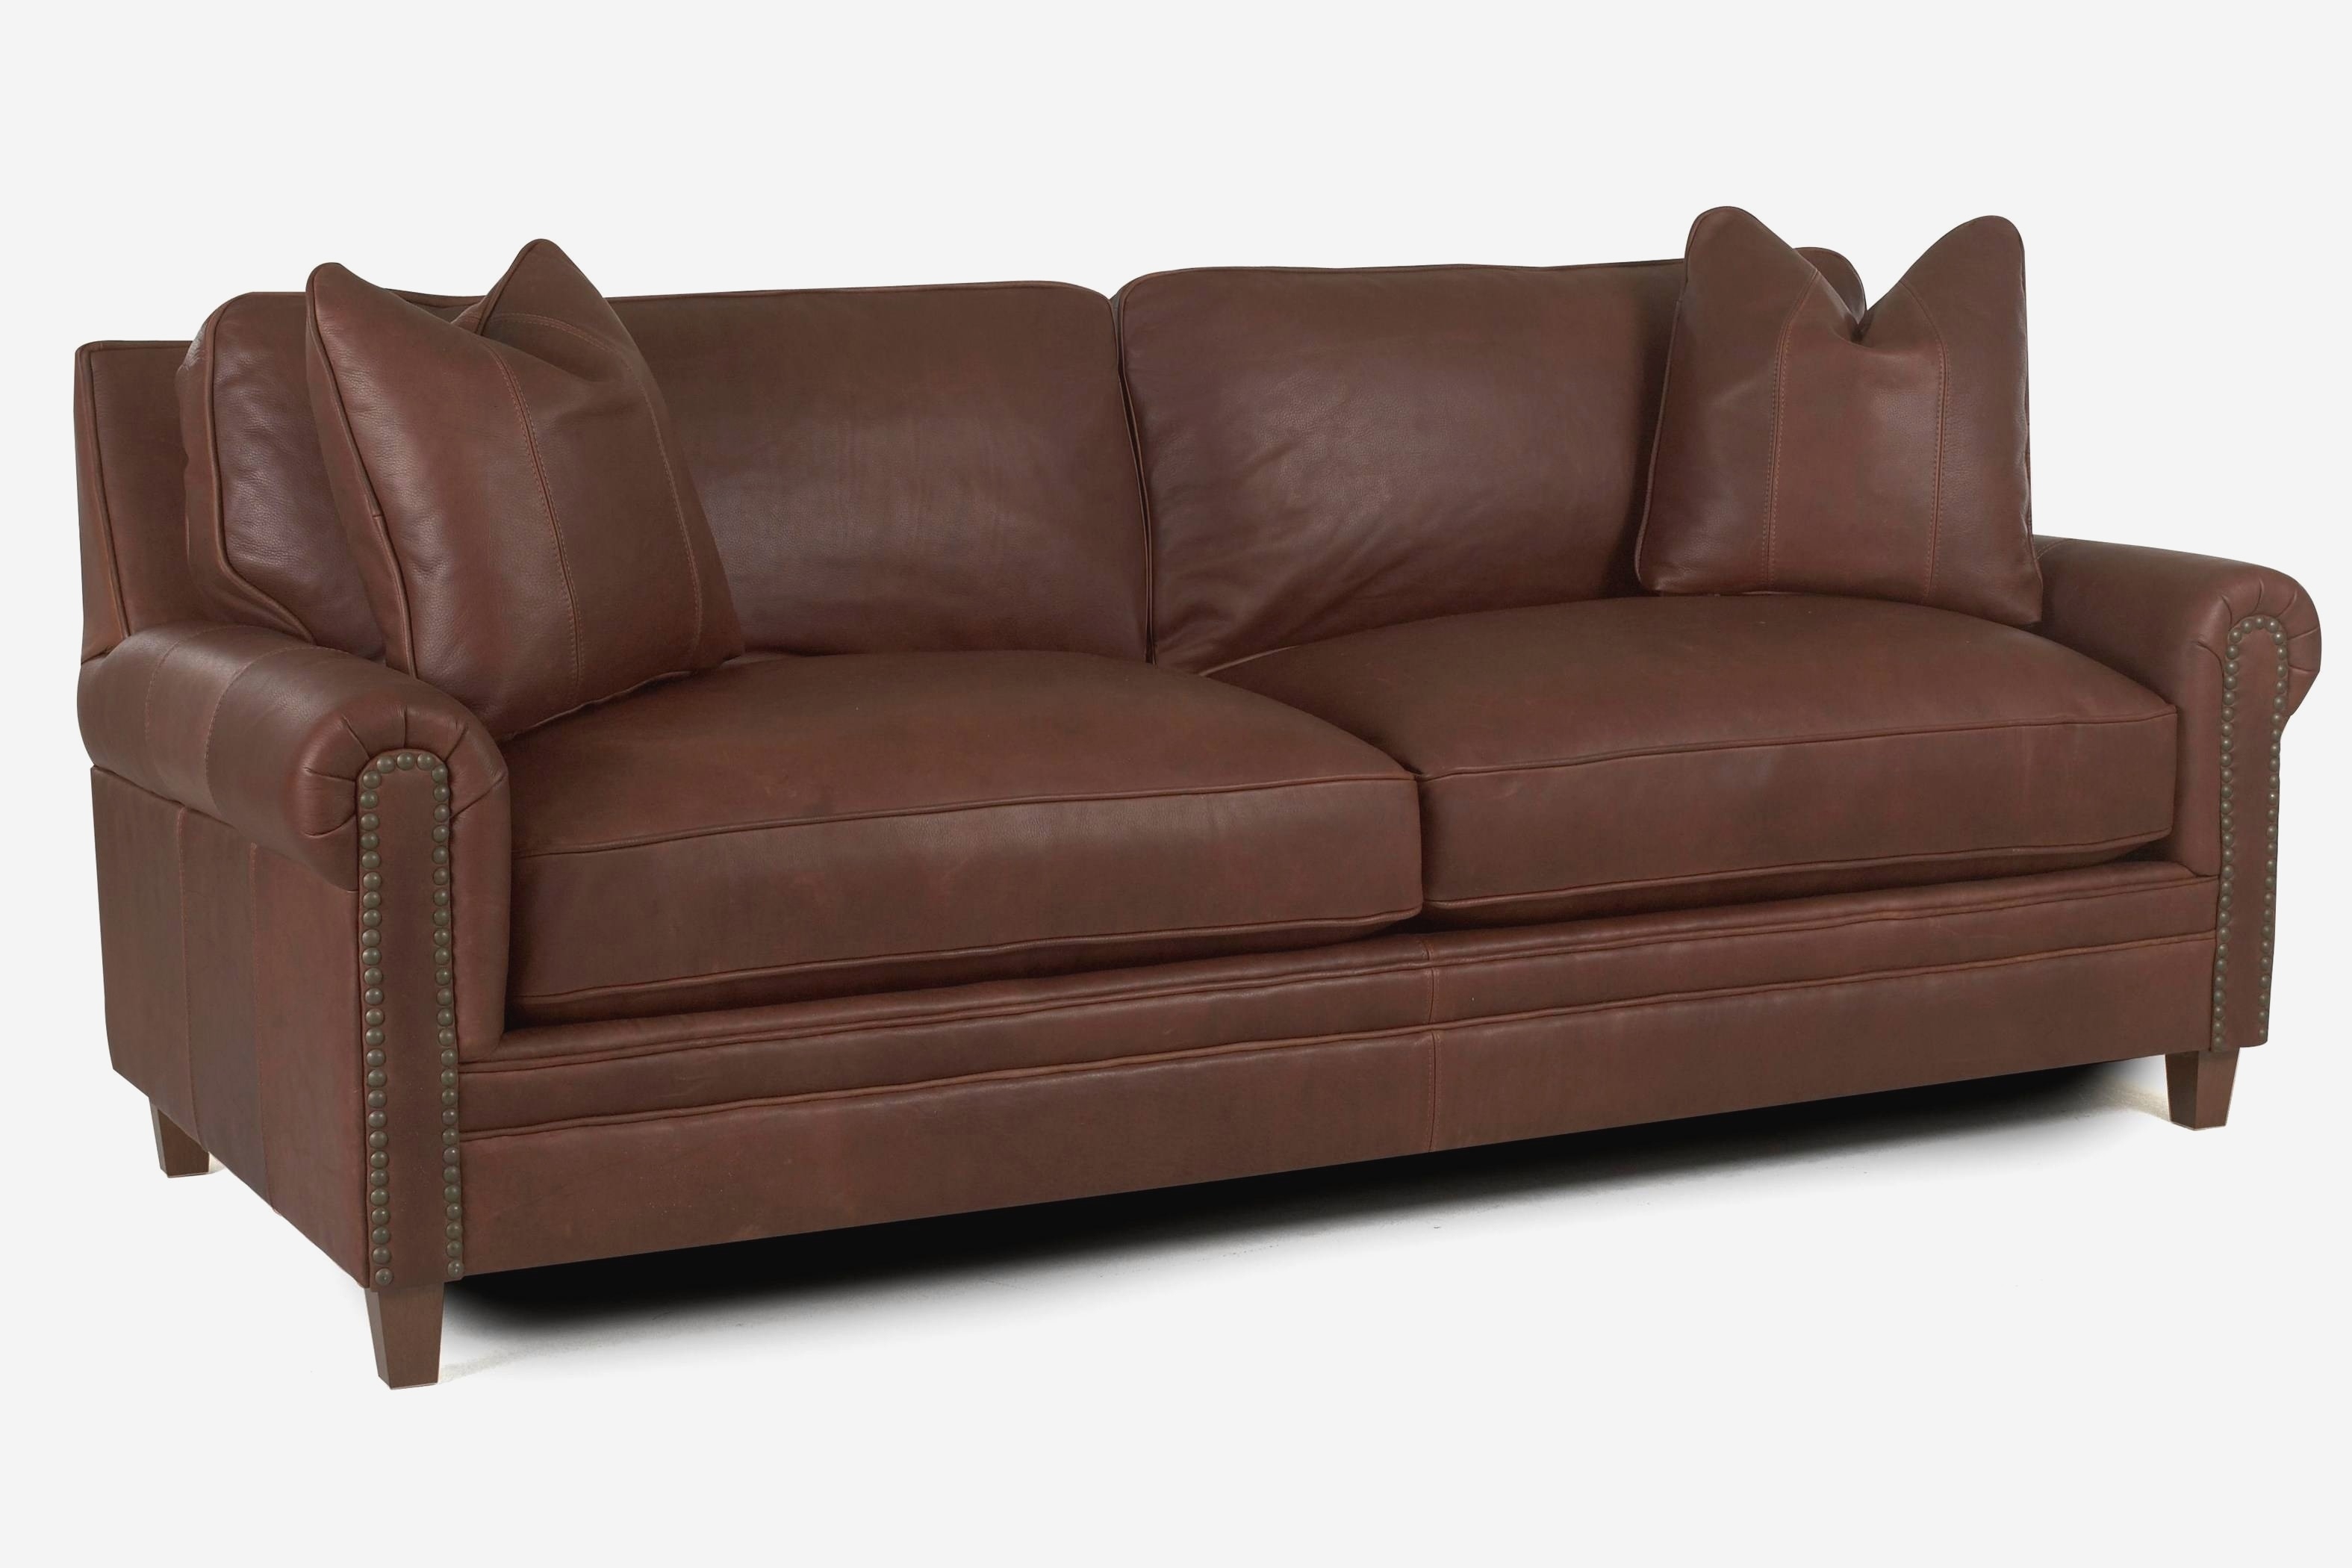 sears leather sleeper sofa